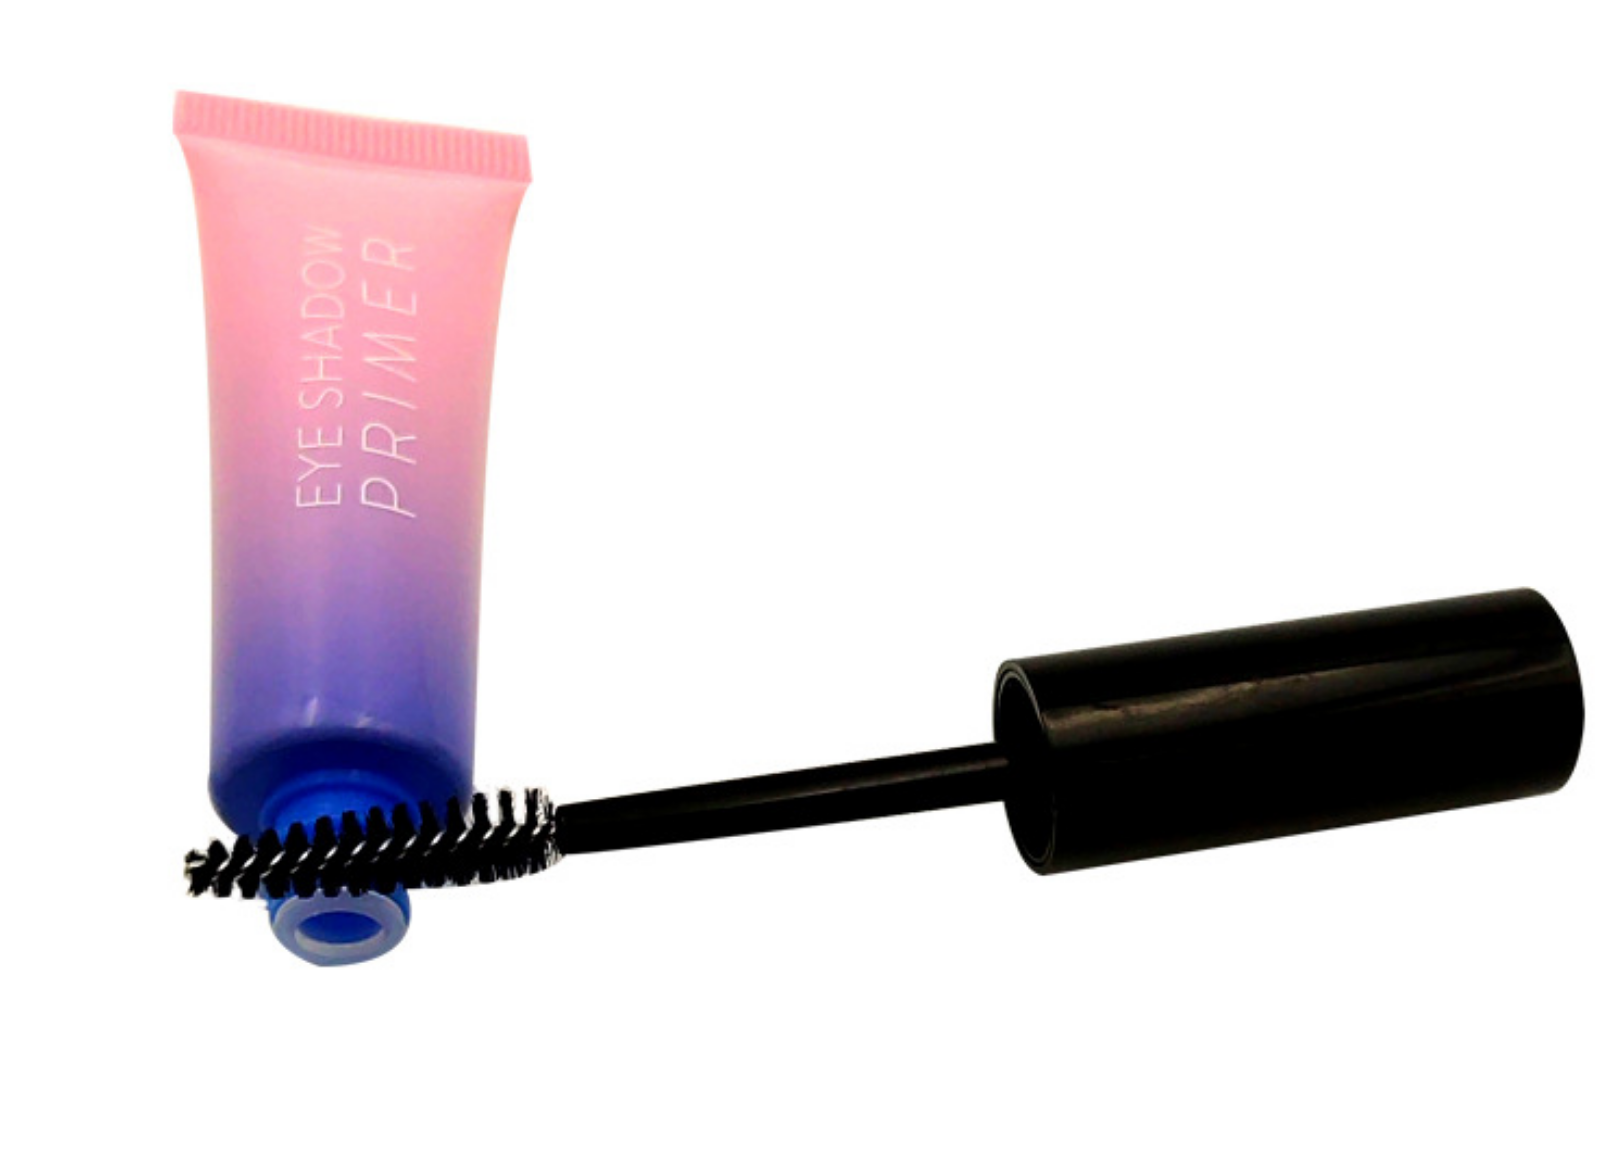 Plastic flat tube Skin care plastic tube Mascara tube with mascara brush Makeup packaging